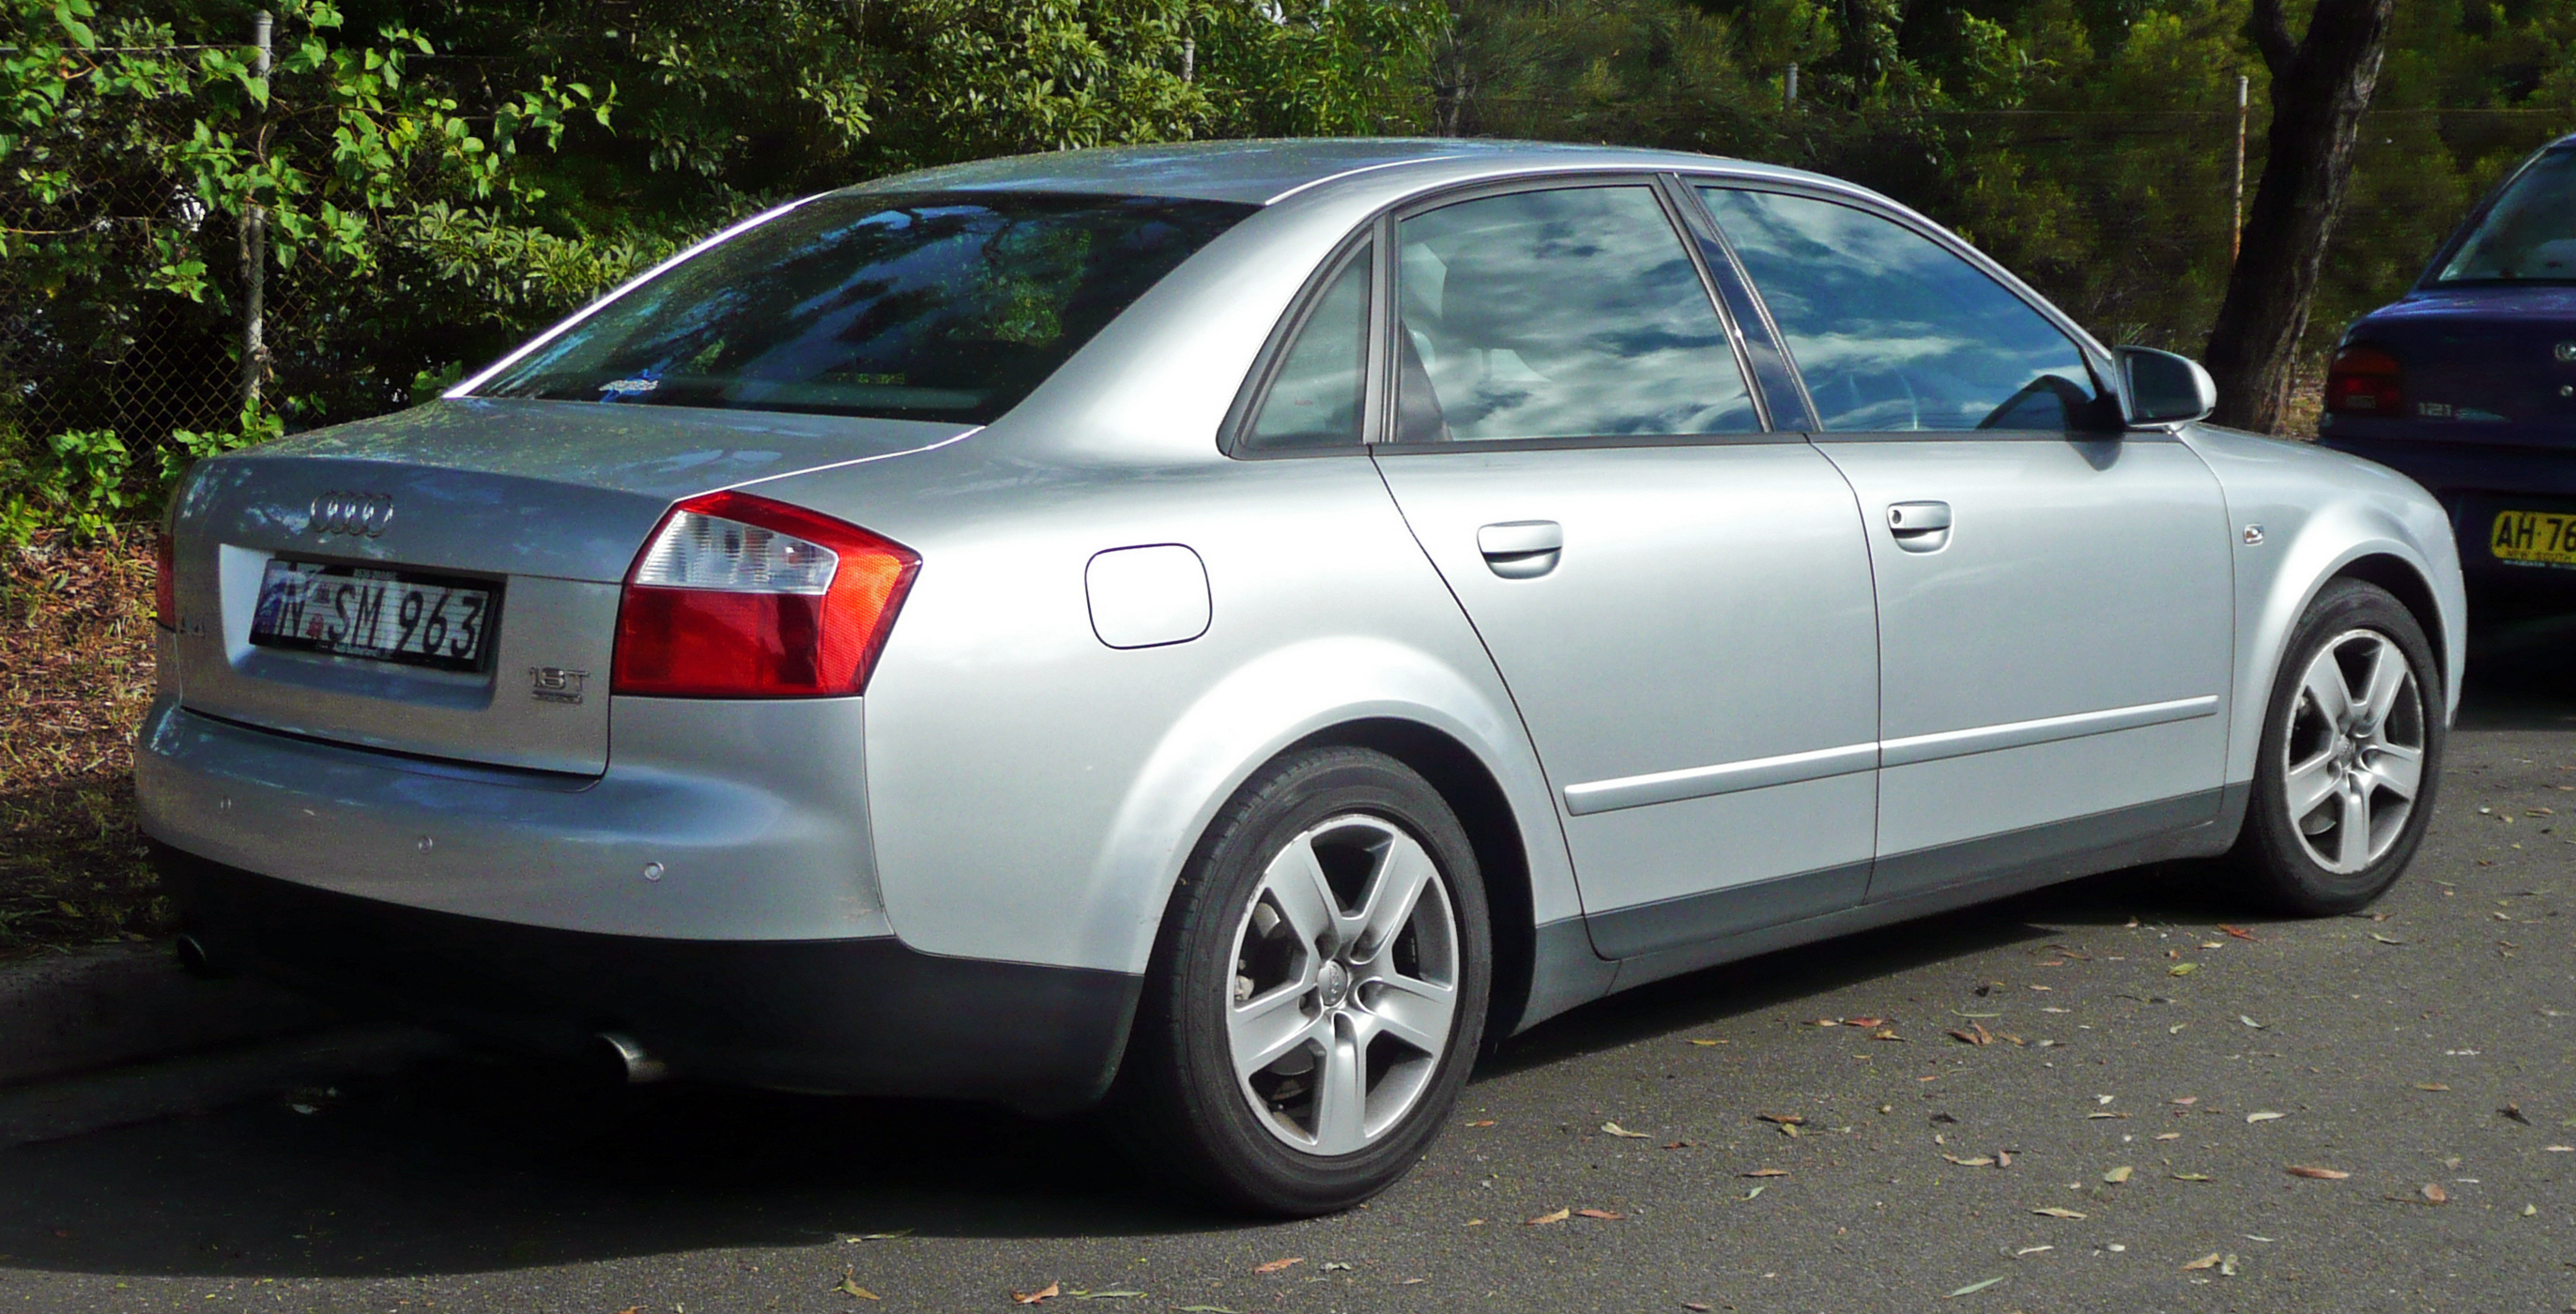 Ауди 4 2001 год. Audi a4 2001. Ауди а4 2001. Audi a4 2001 седан. Audi a4/s4 2001.